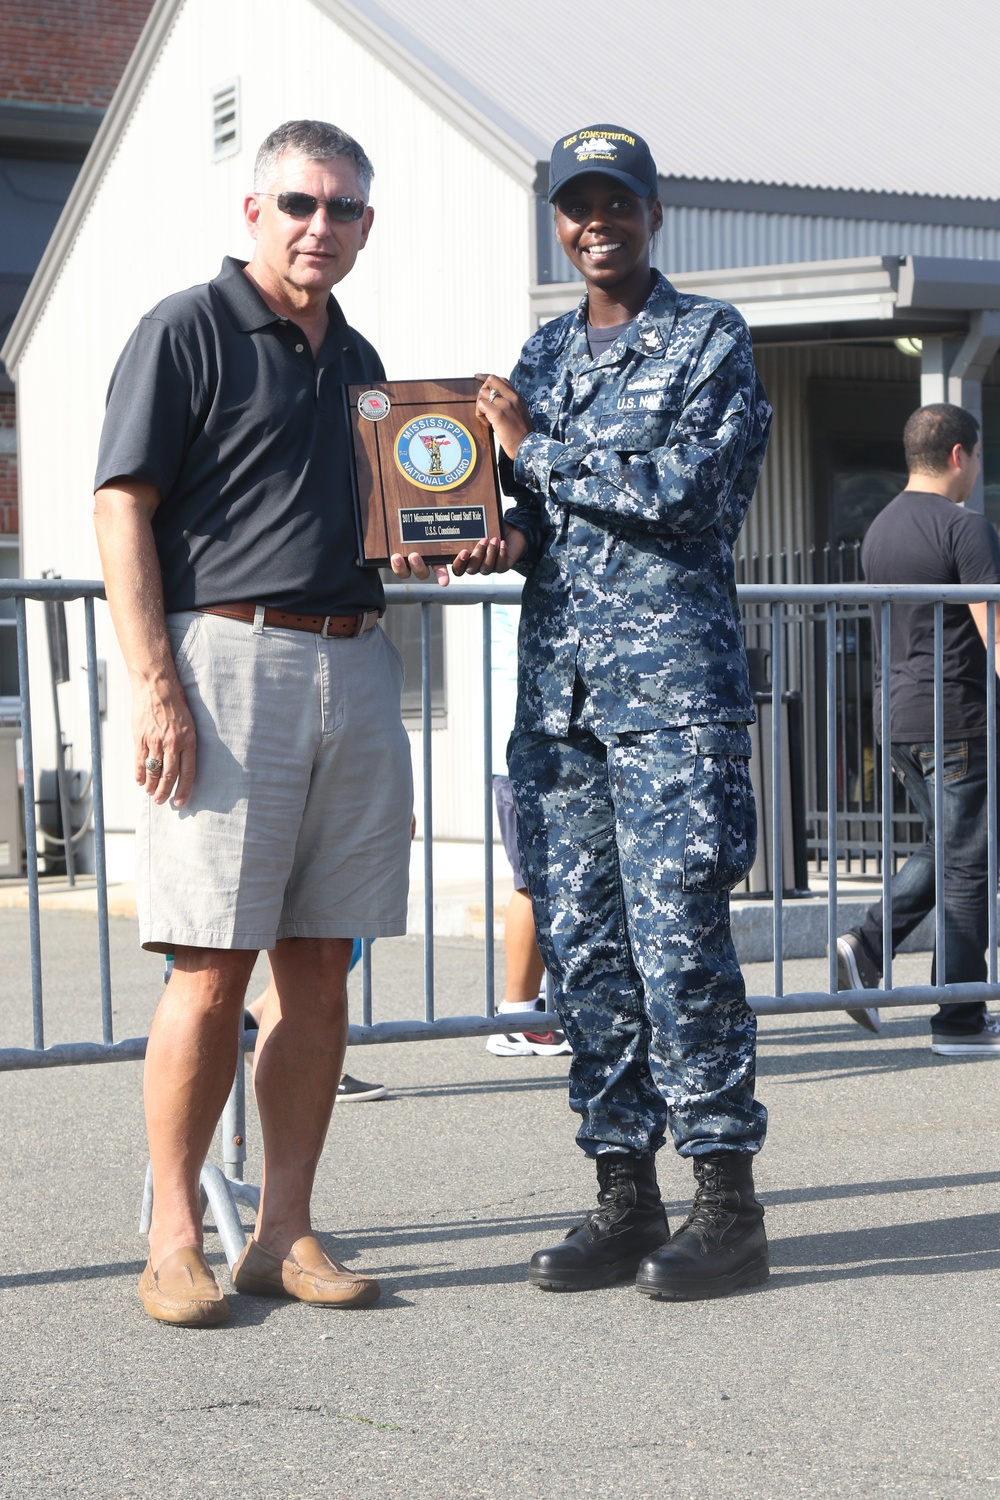 Awarded at the Navy Yard